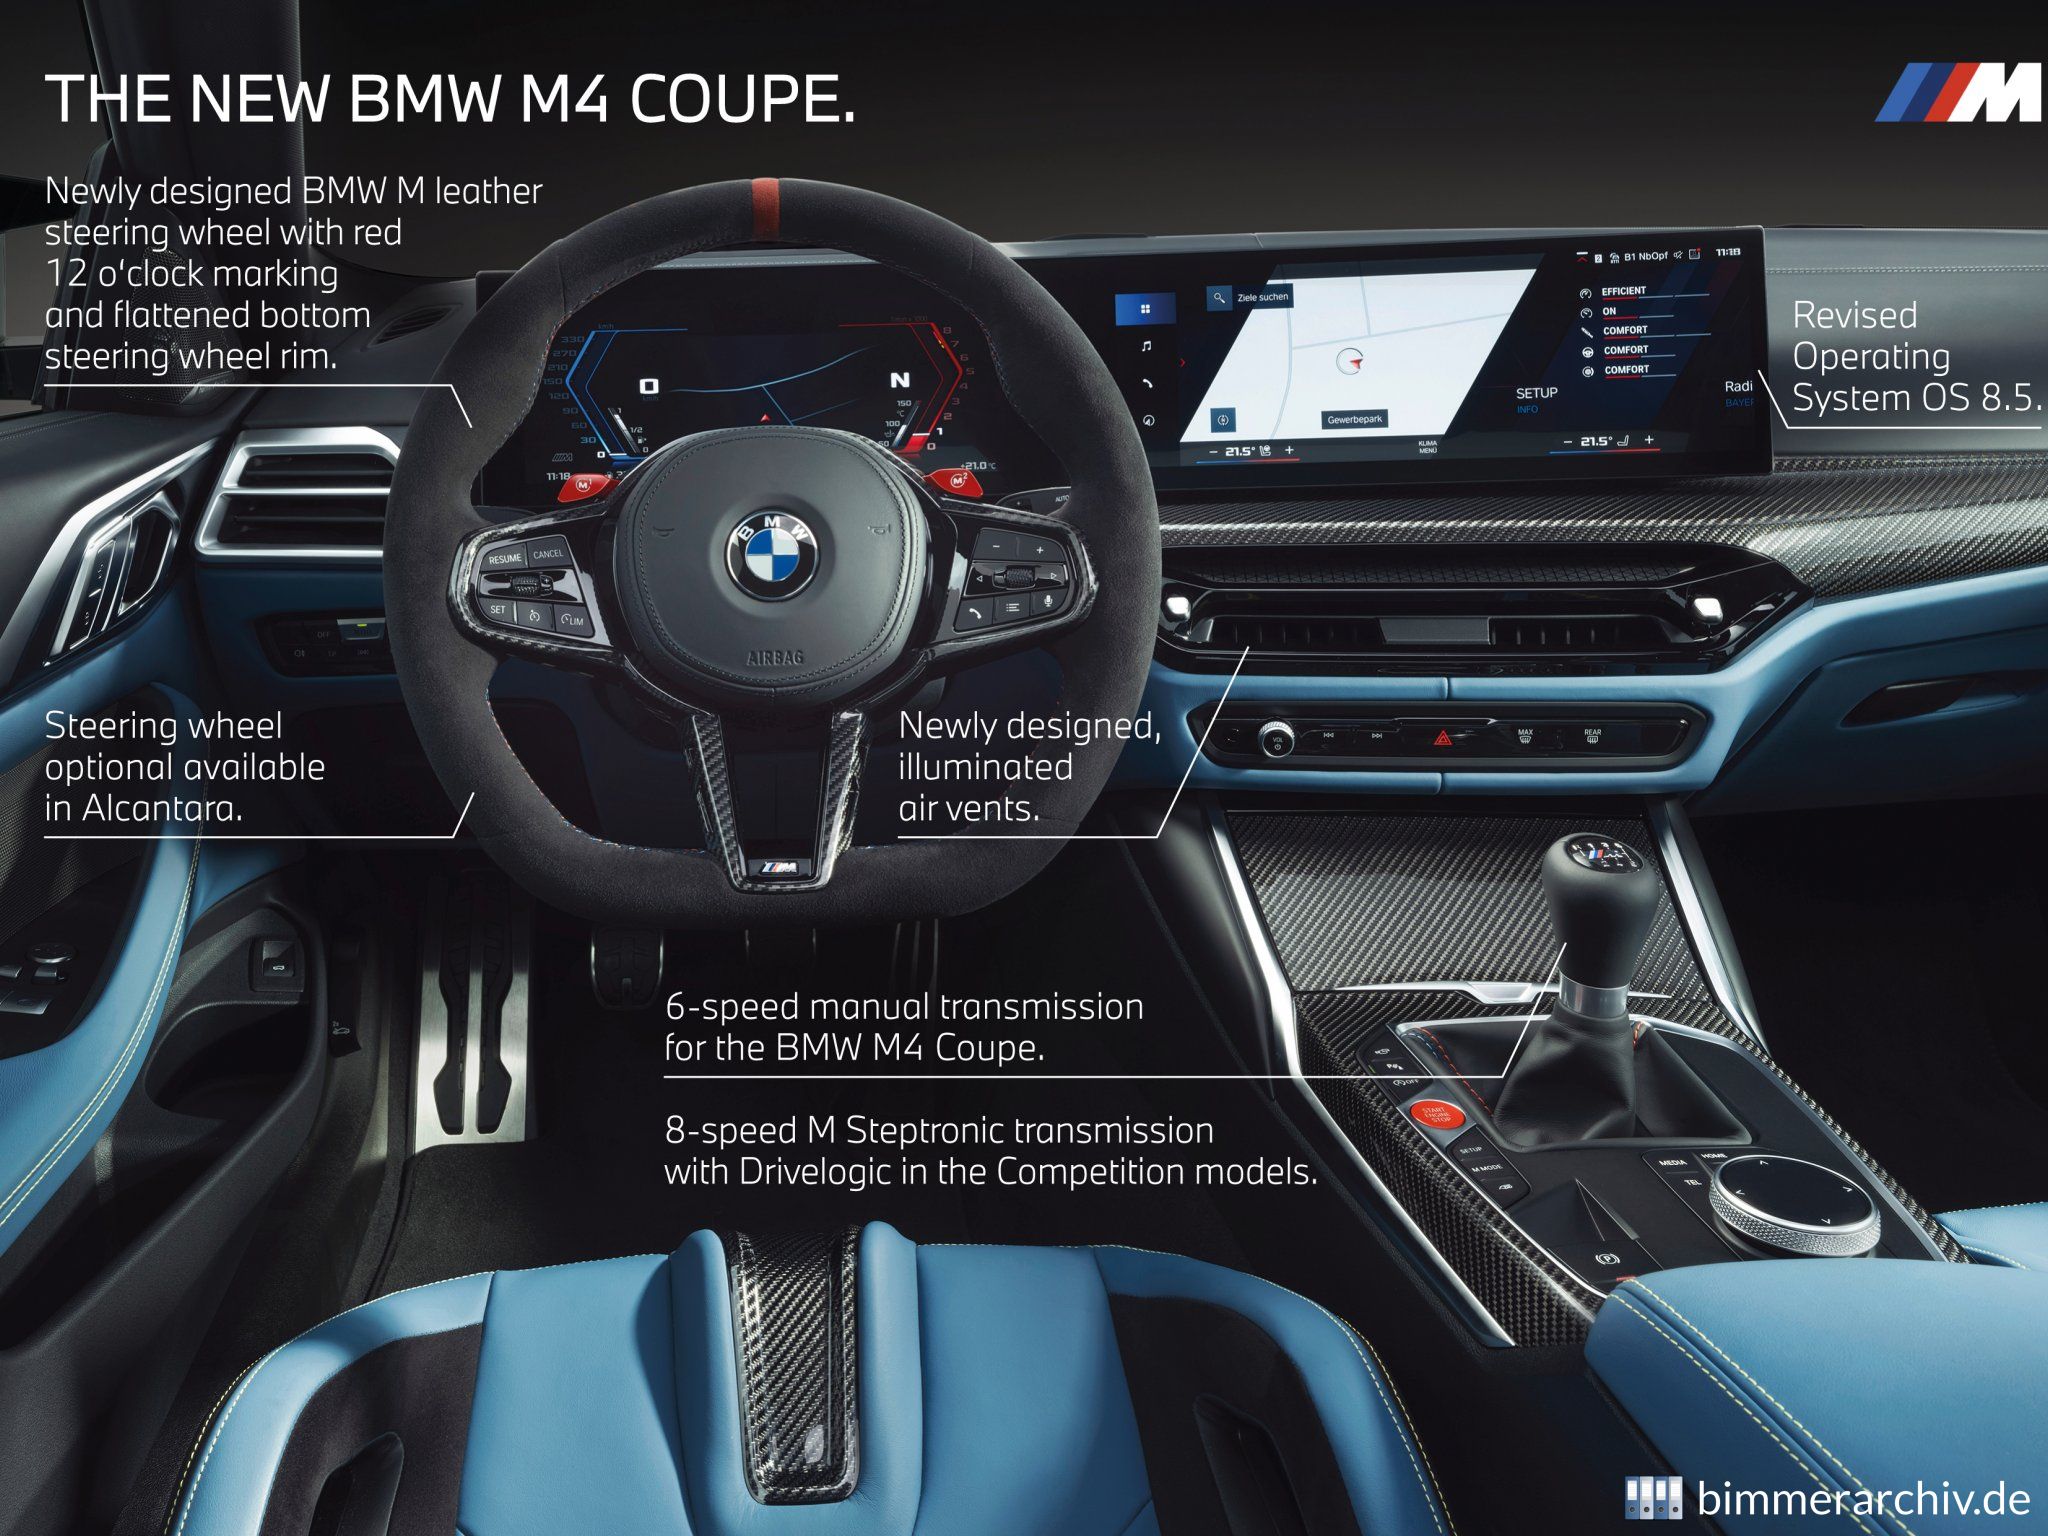 BMW M4 Coupé - Highlights